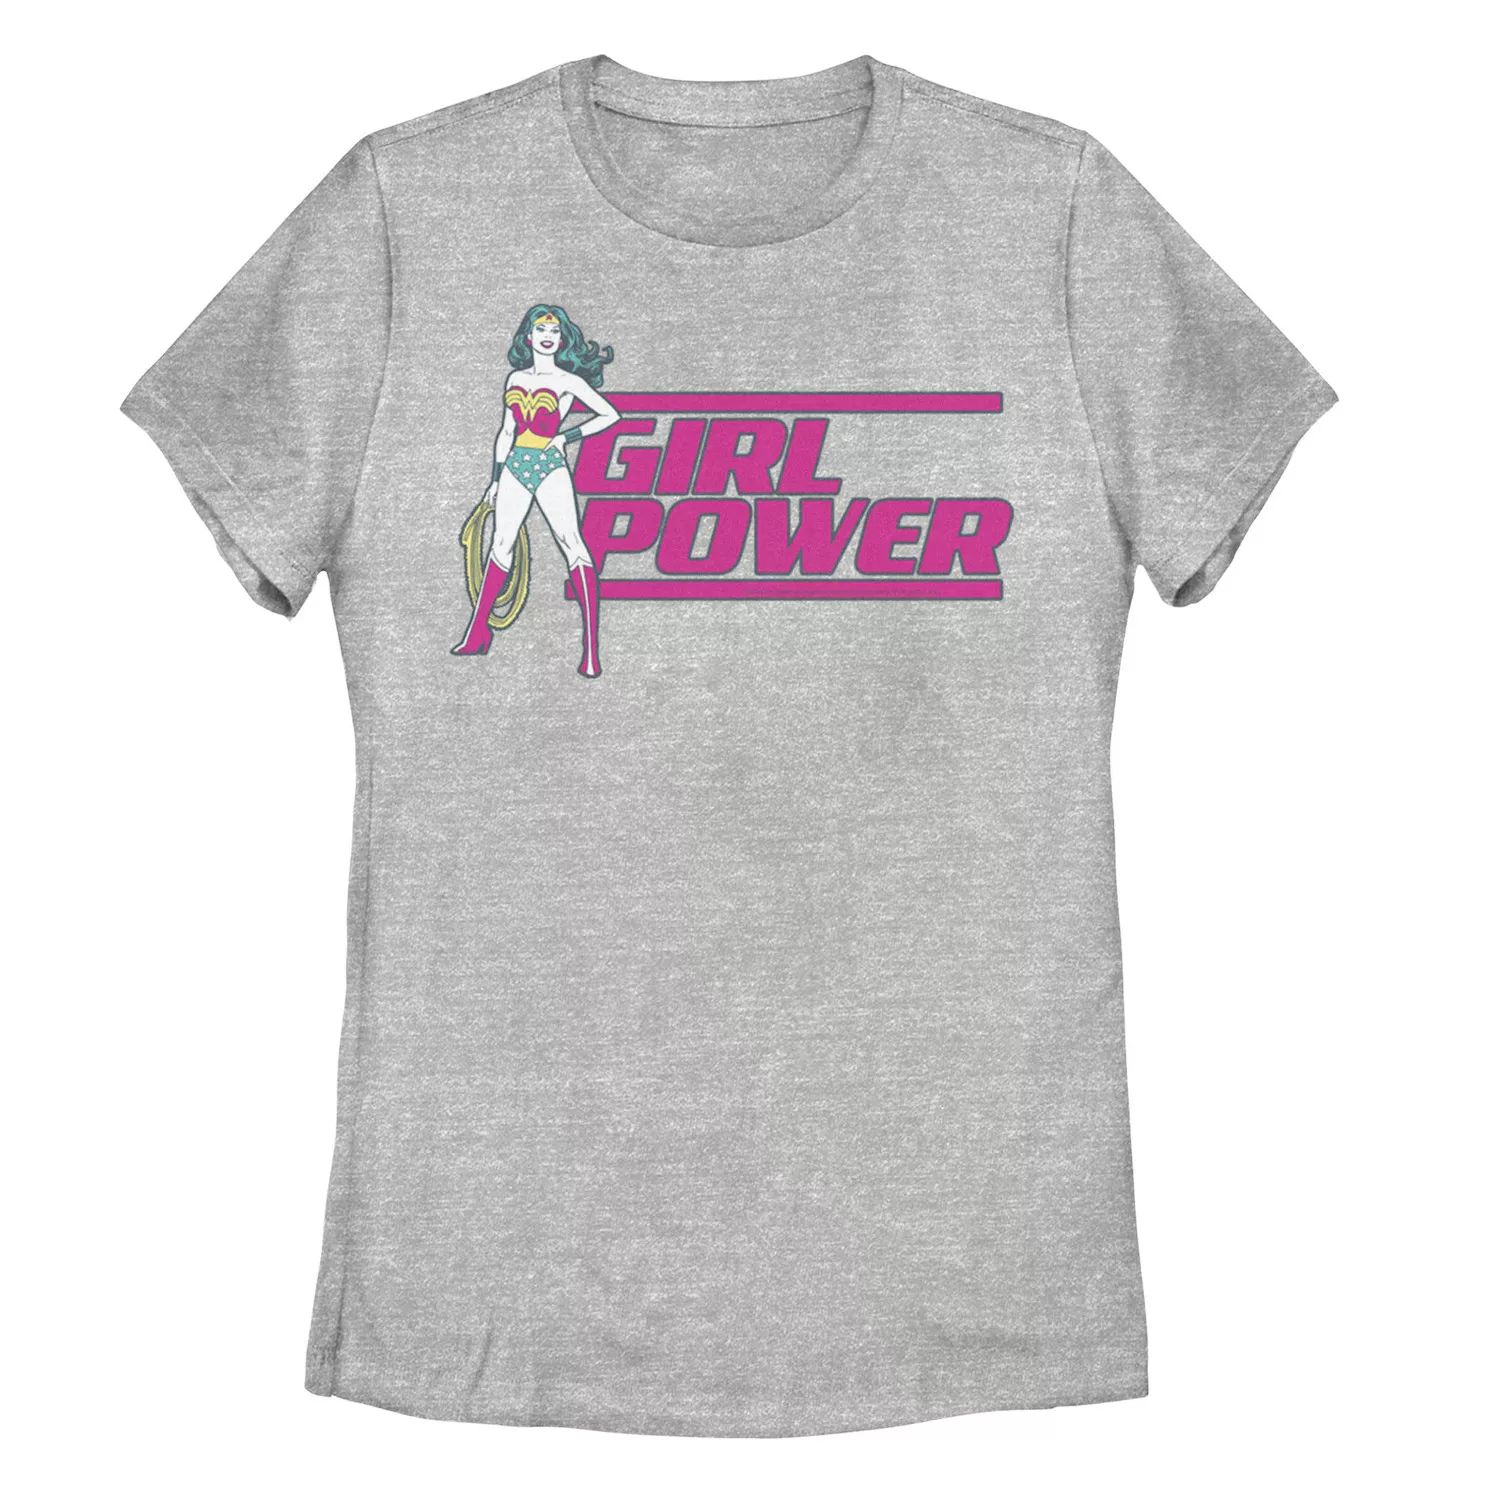 

Футболка с рисунком лассо для юниоров DC Comics Wonder Woman "Girl Power" Licensed Character